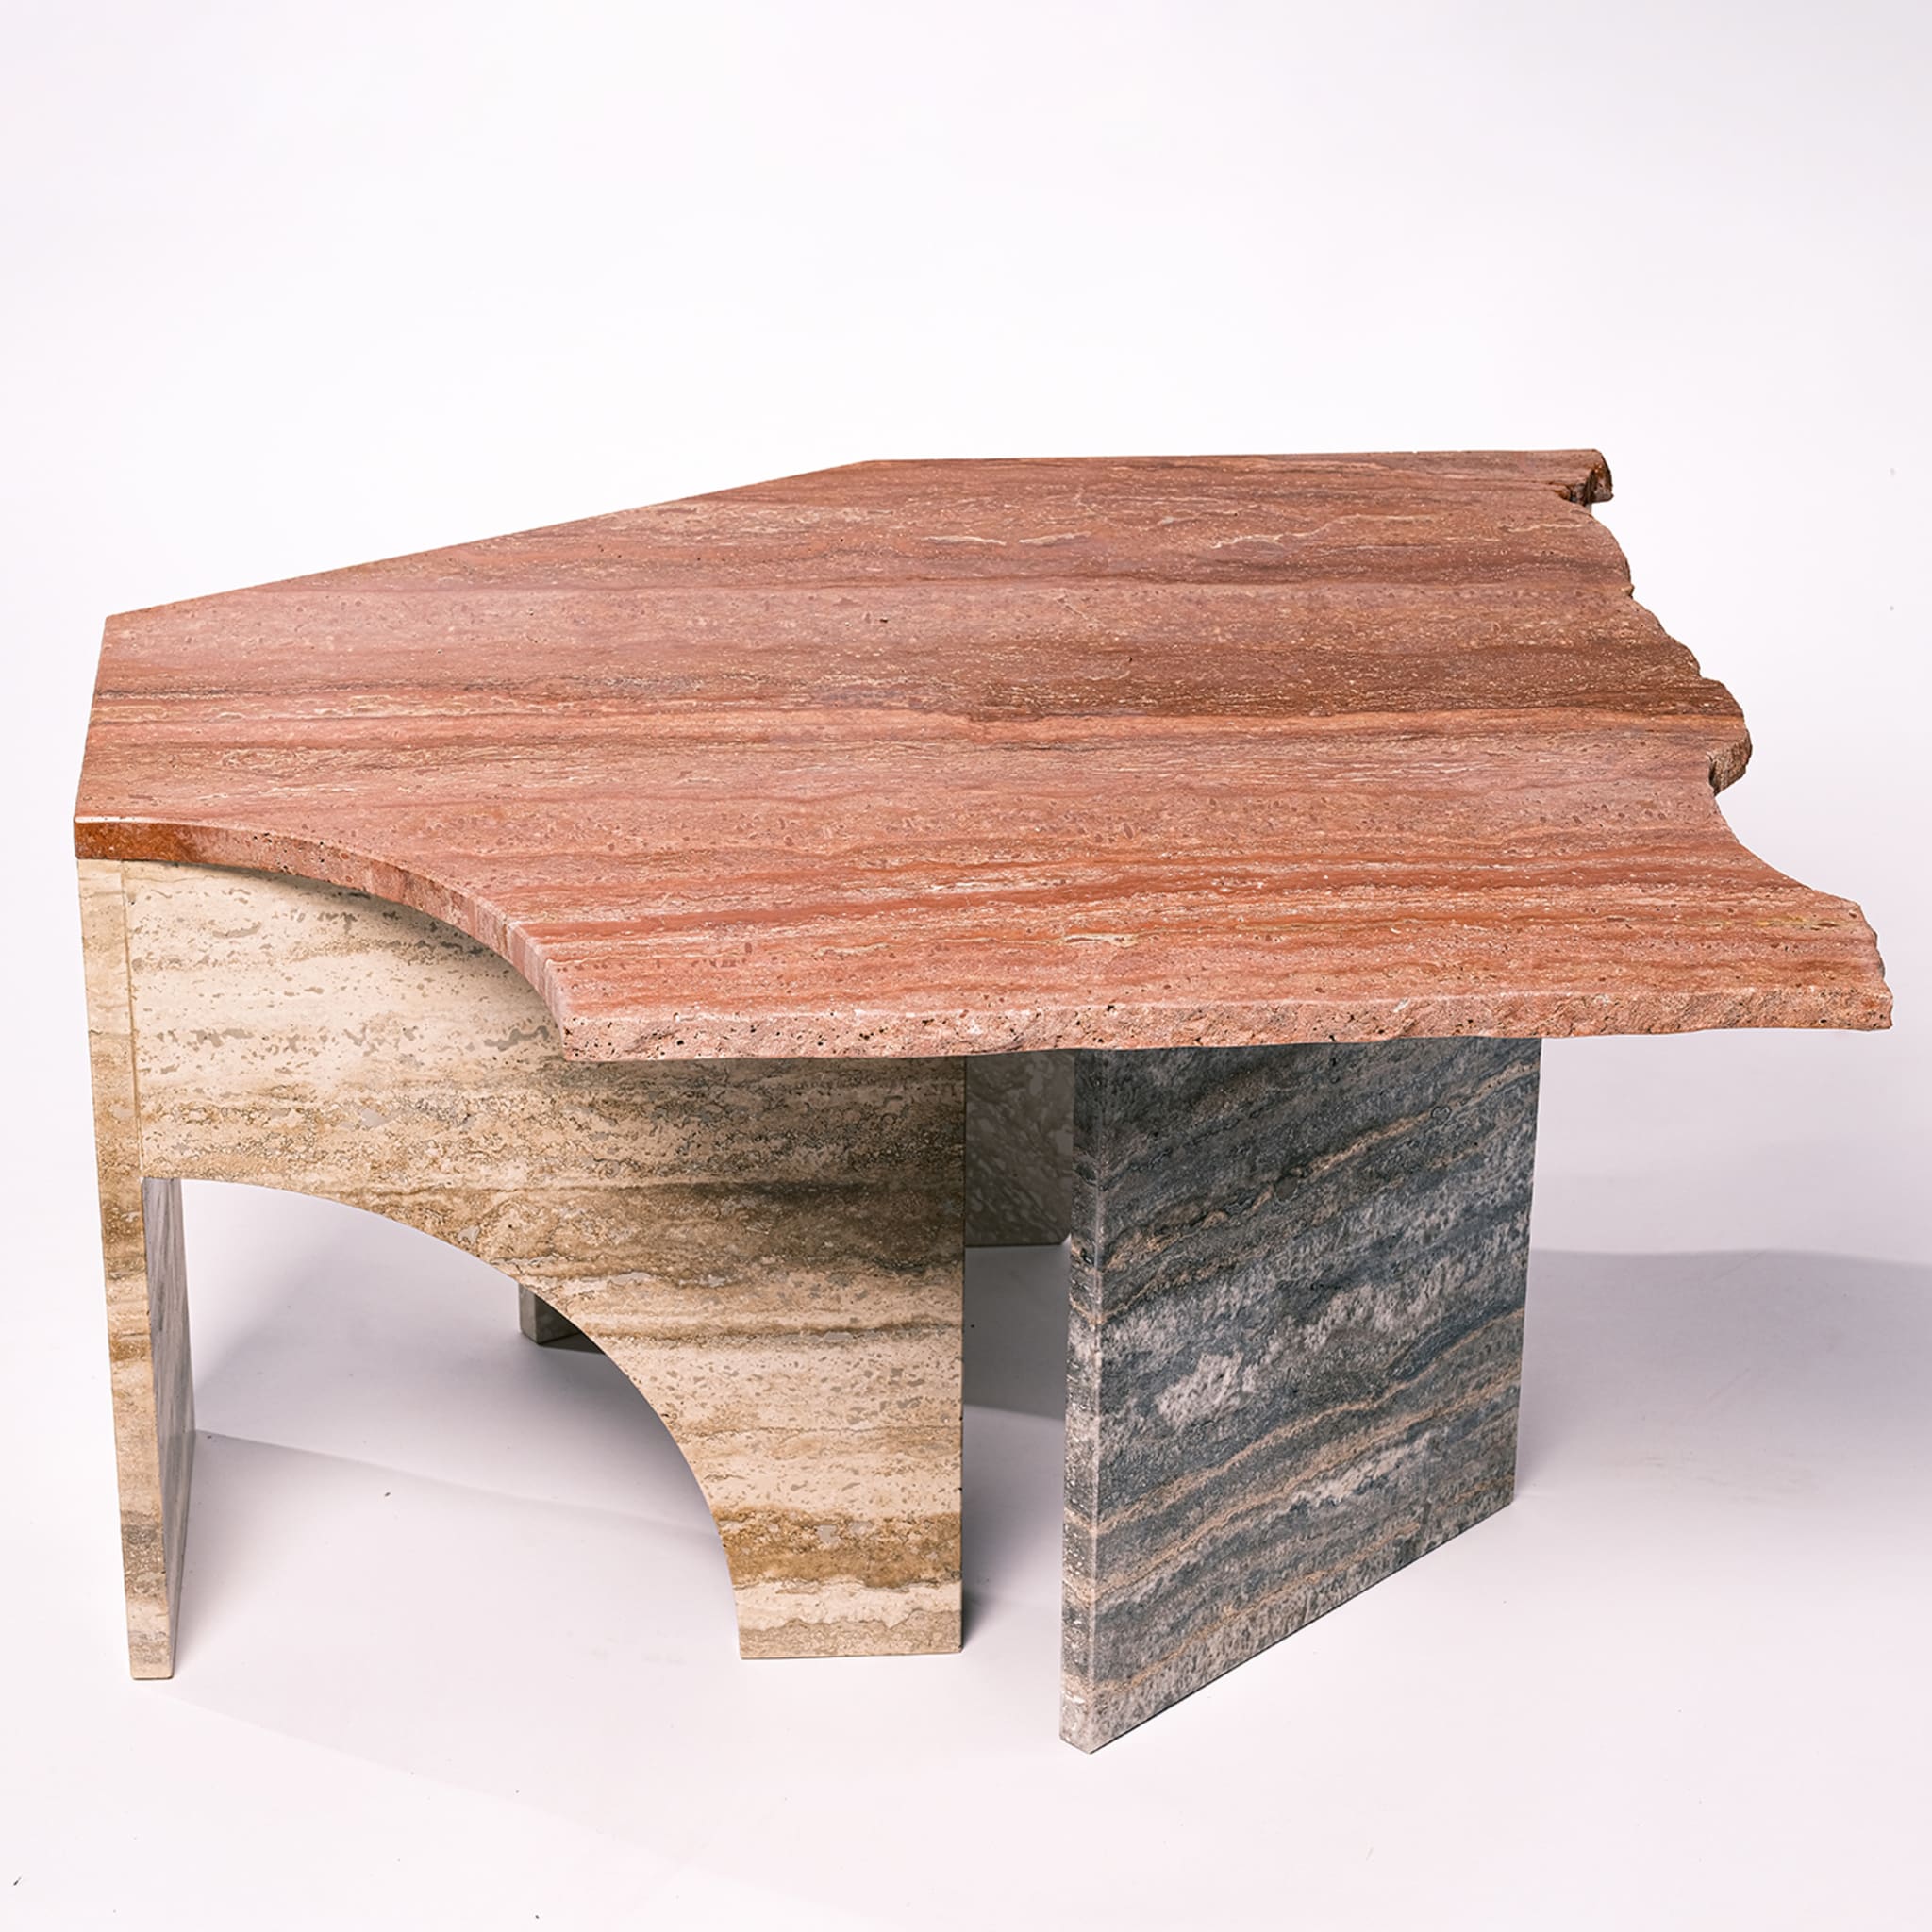 Ritagli B Asymmetrical Coffee Table #2 by Studiopepe Design - Alternative view 5